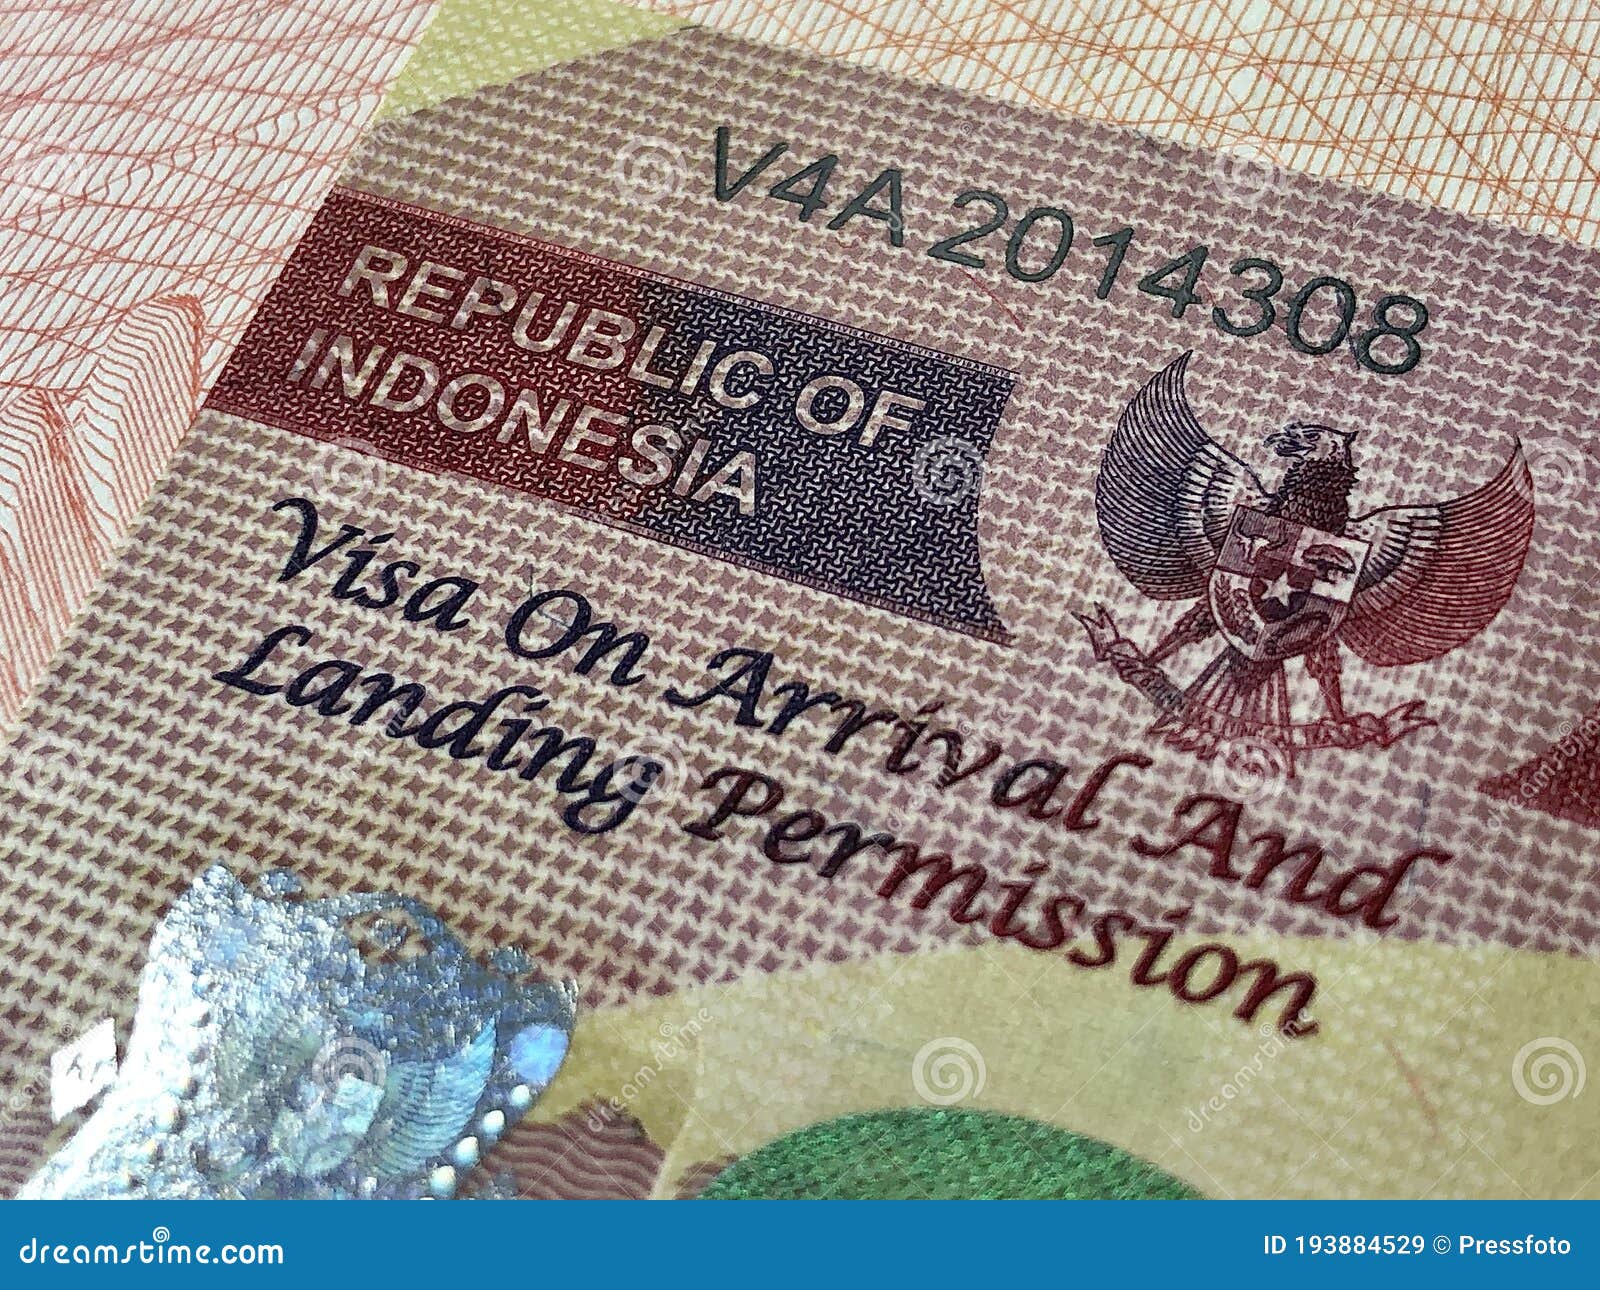 indonesia visit visa on arrival